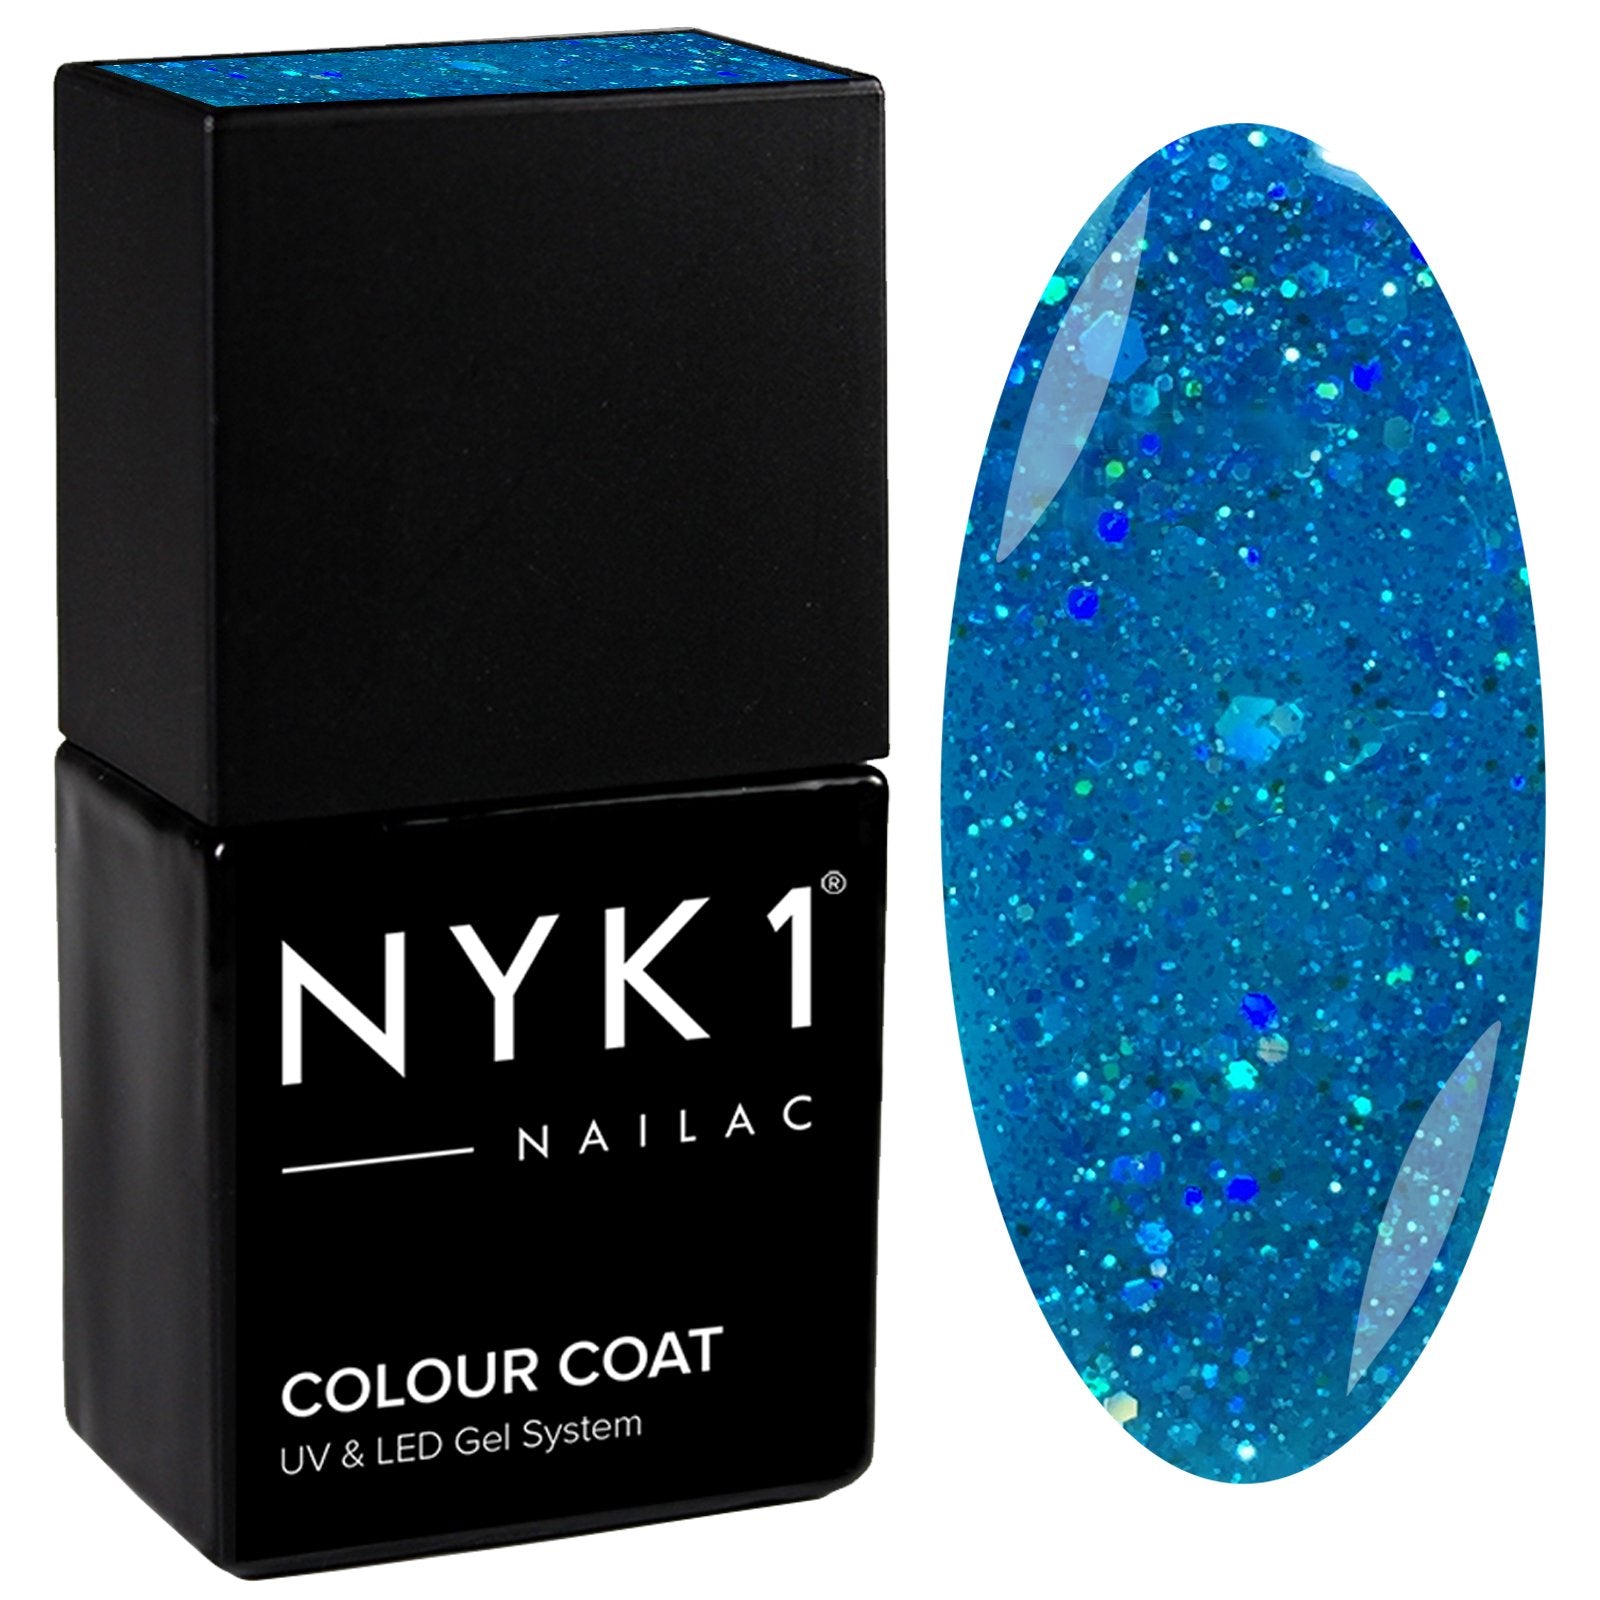 NYK1 Nailac Blue Mermaid Glitter Sparkle Gel Nail Polish